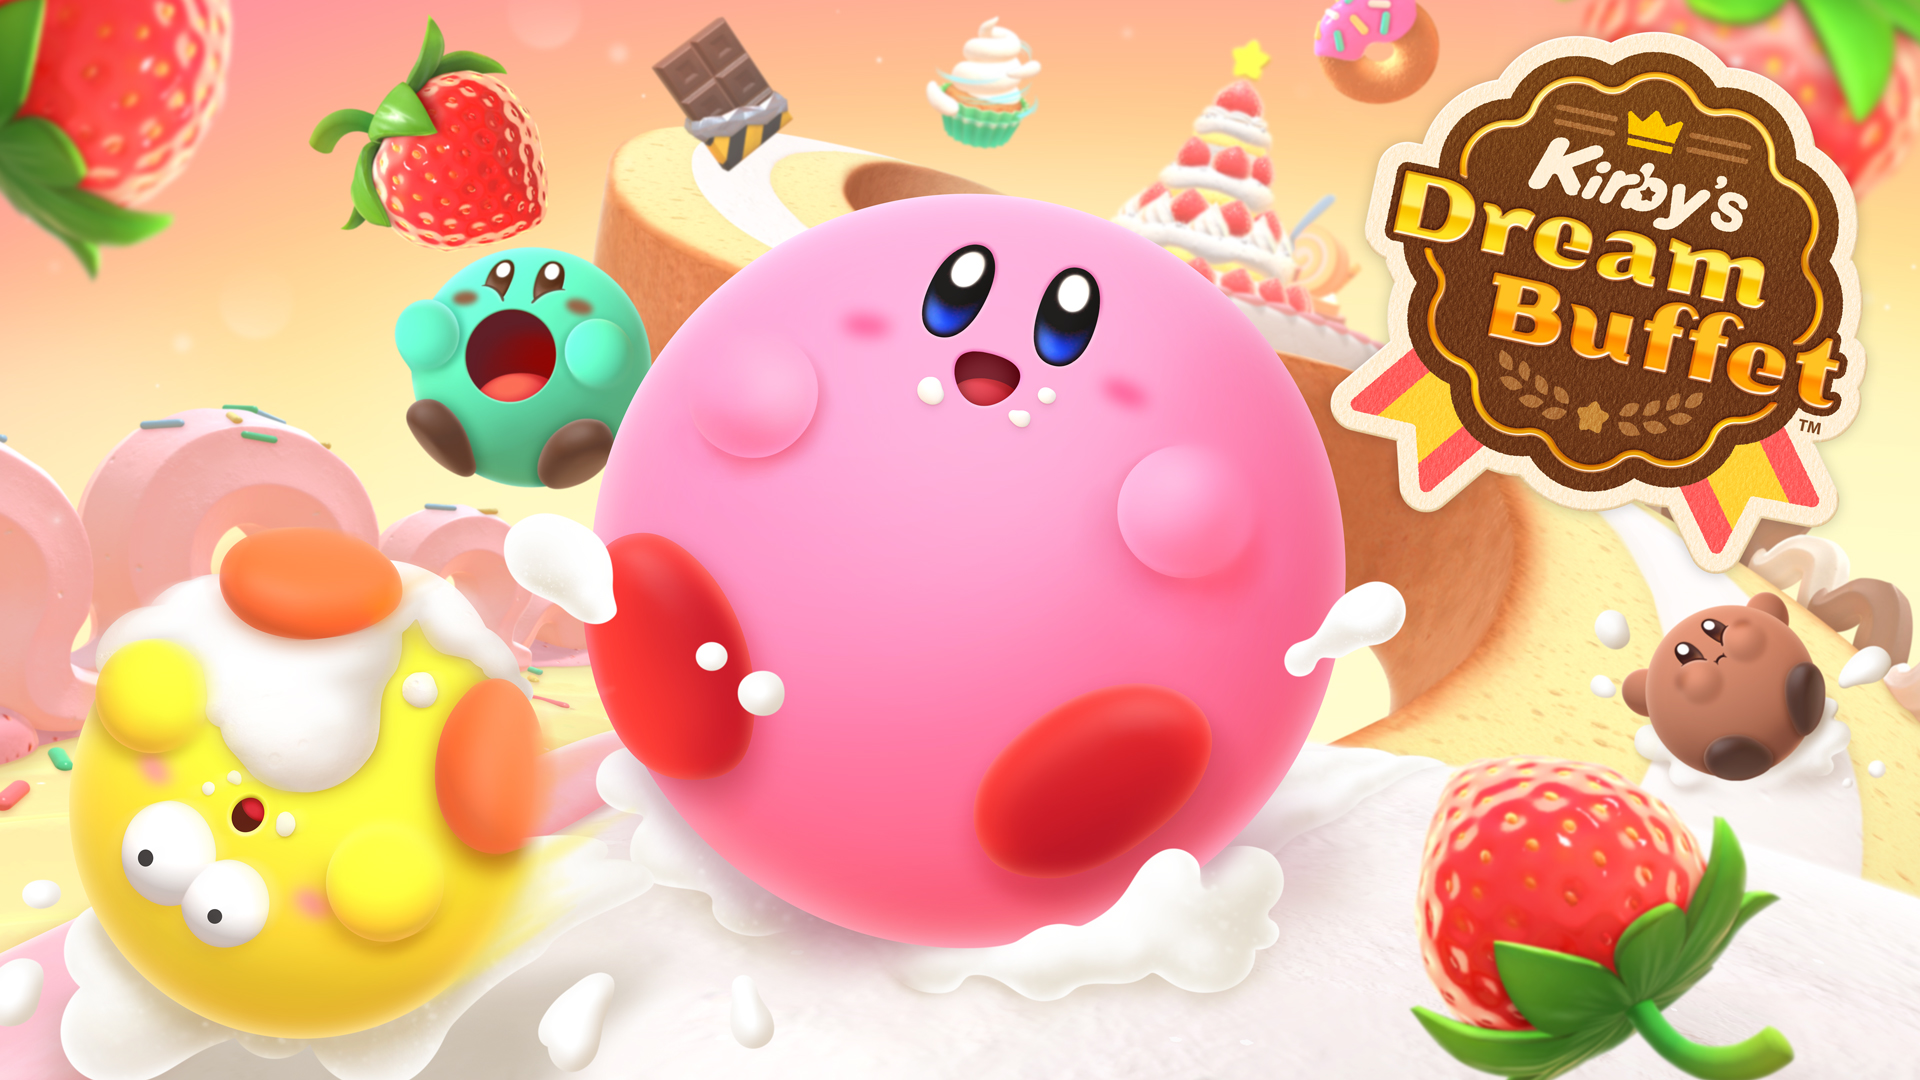 Kirbys-Dream-Buffet.jpg